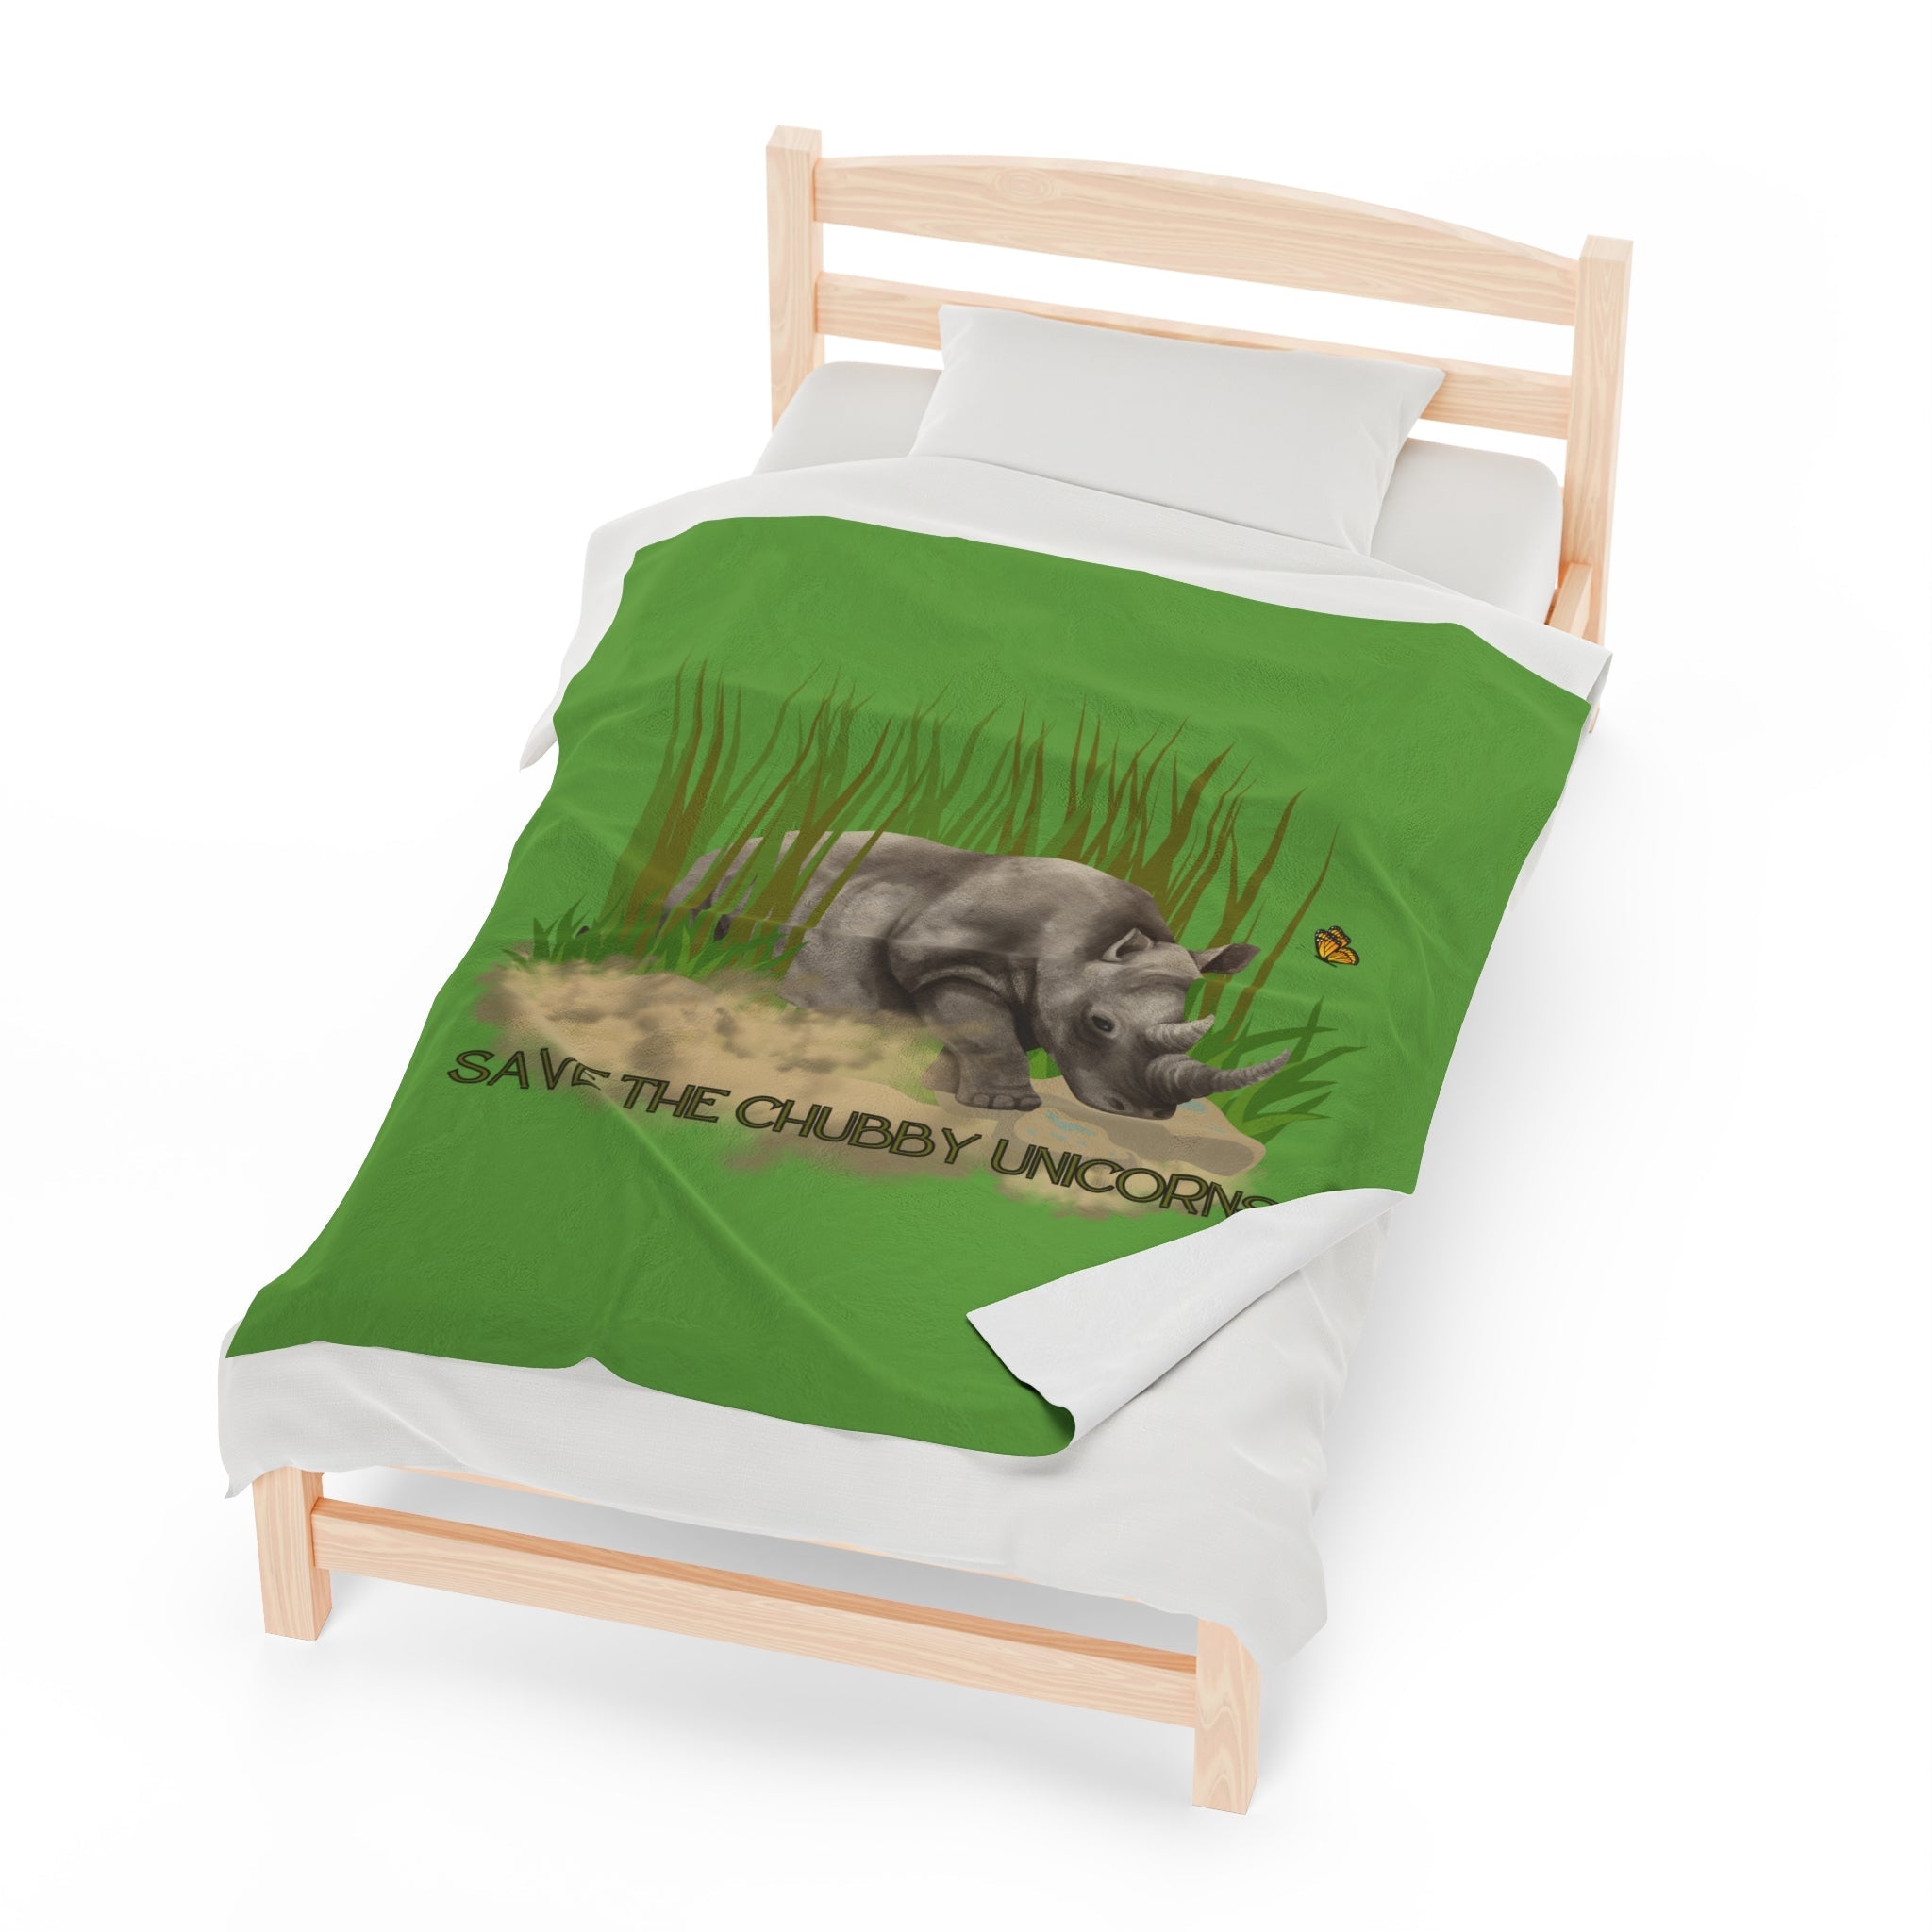 ADVOCATE FOR ENDANGERED ANIMALS Save the Chubby Unicorns Grassland- Plush Blanket - TheSloanCreative